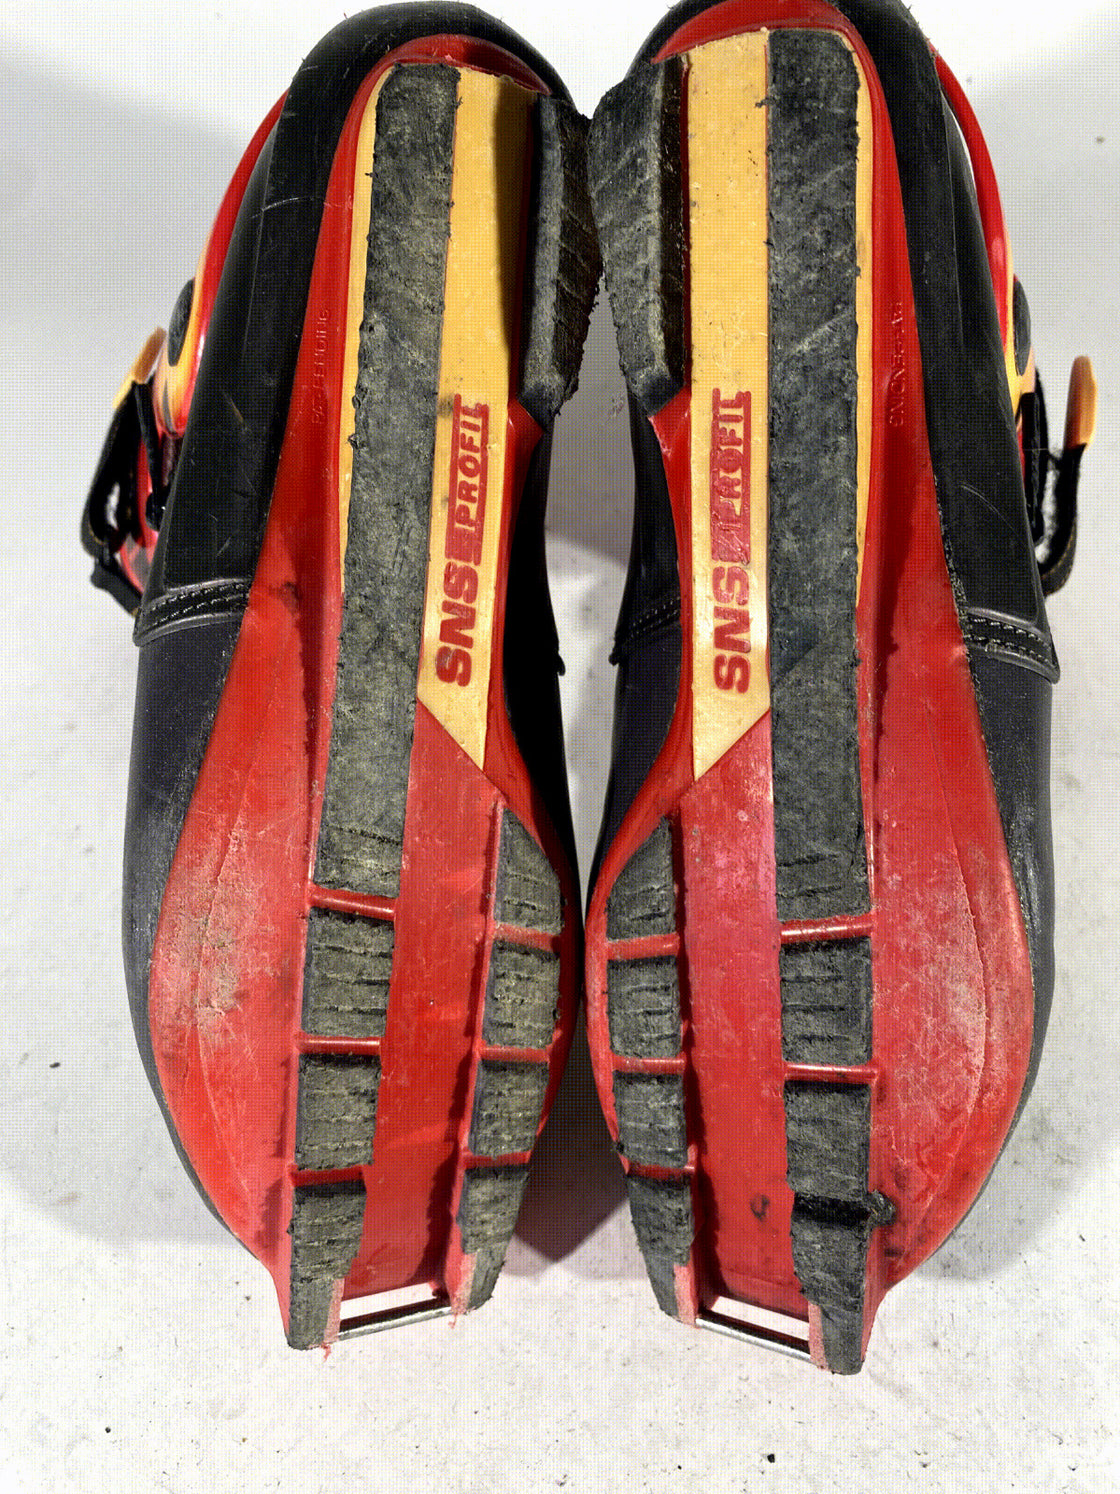 Salomon Skate Nordic Cross Country Ski Boots Size EU40 2/3 US7.5 SNS Profil